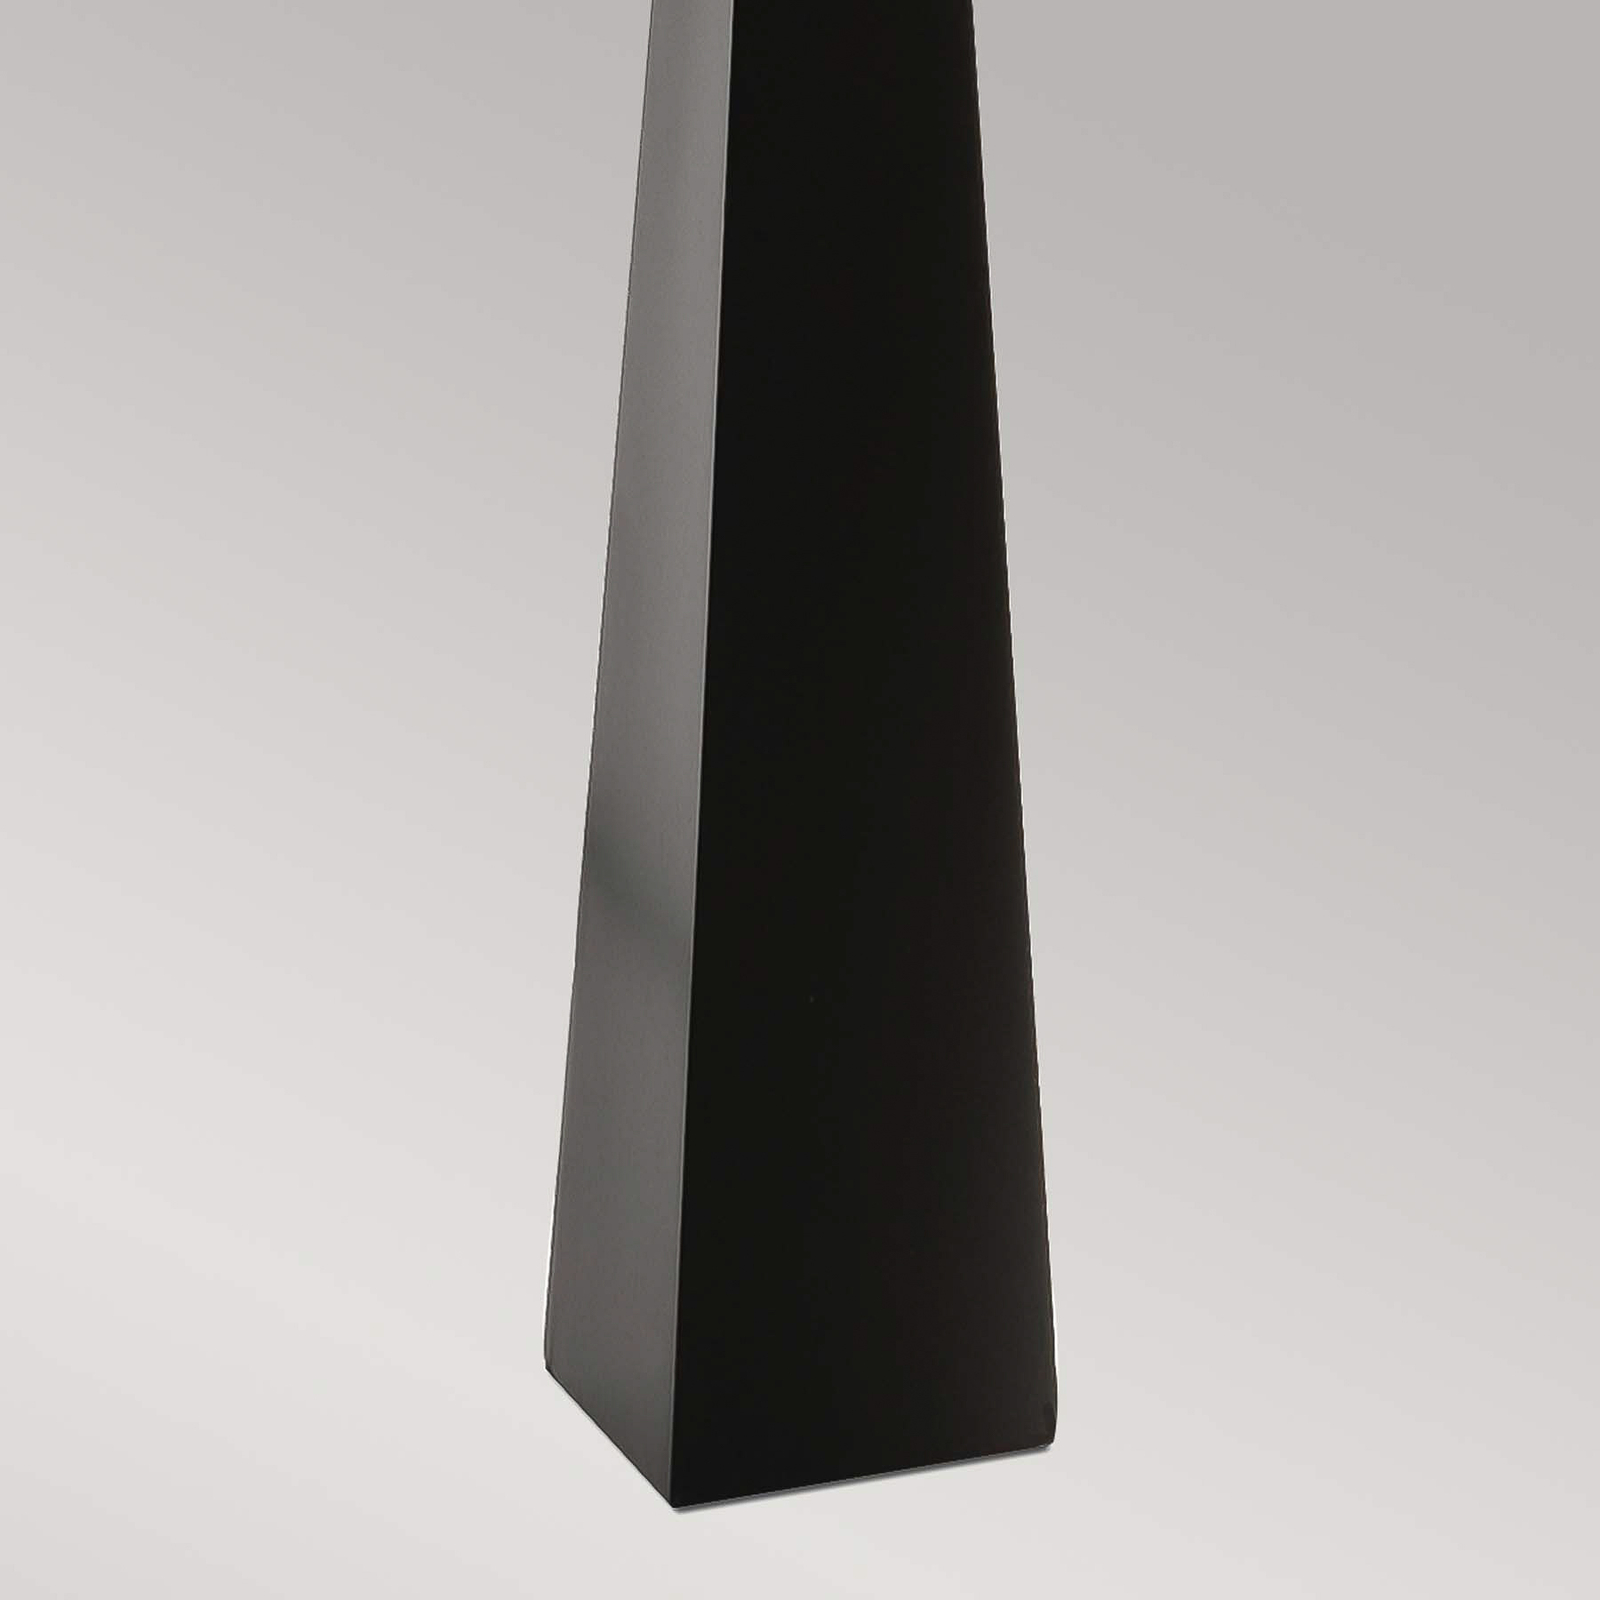 Ascent floor lamp, black, white lampshade